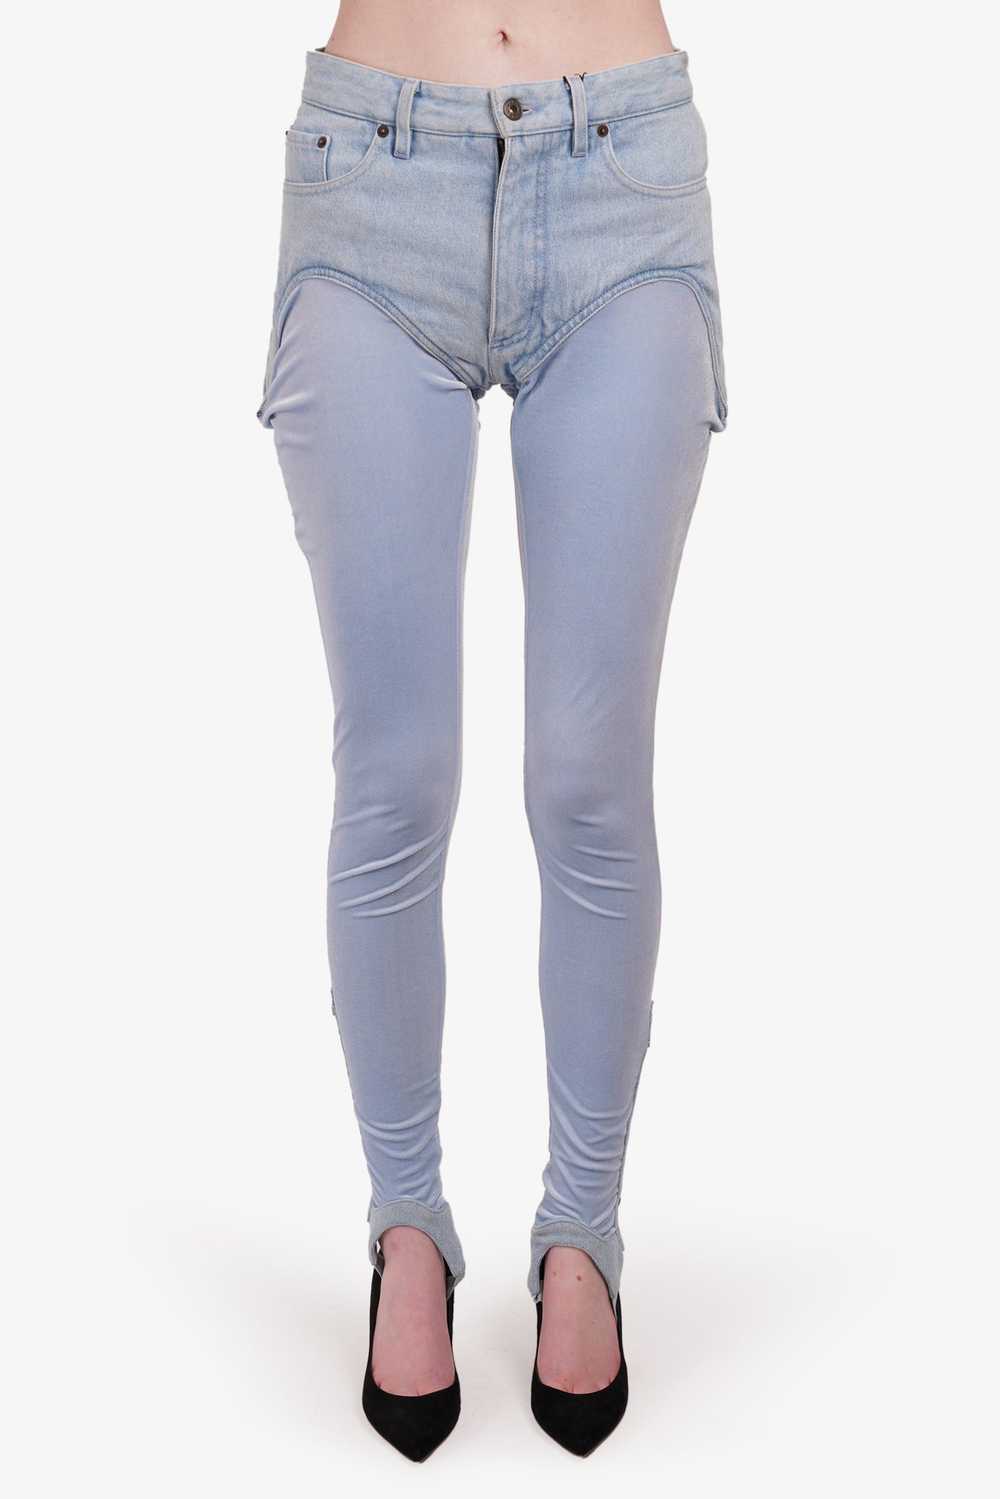 Y Project Blue Denim/Velvet Stirrup Pants Size S - image 1